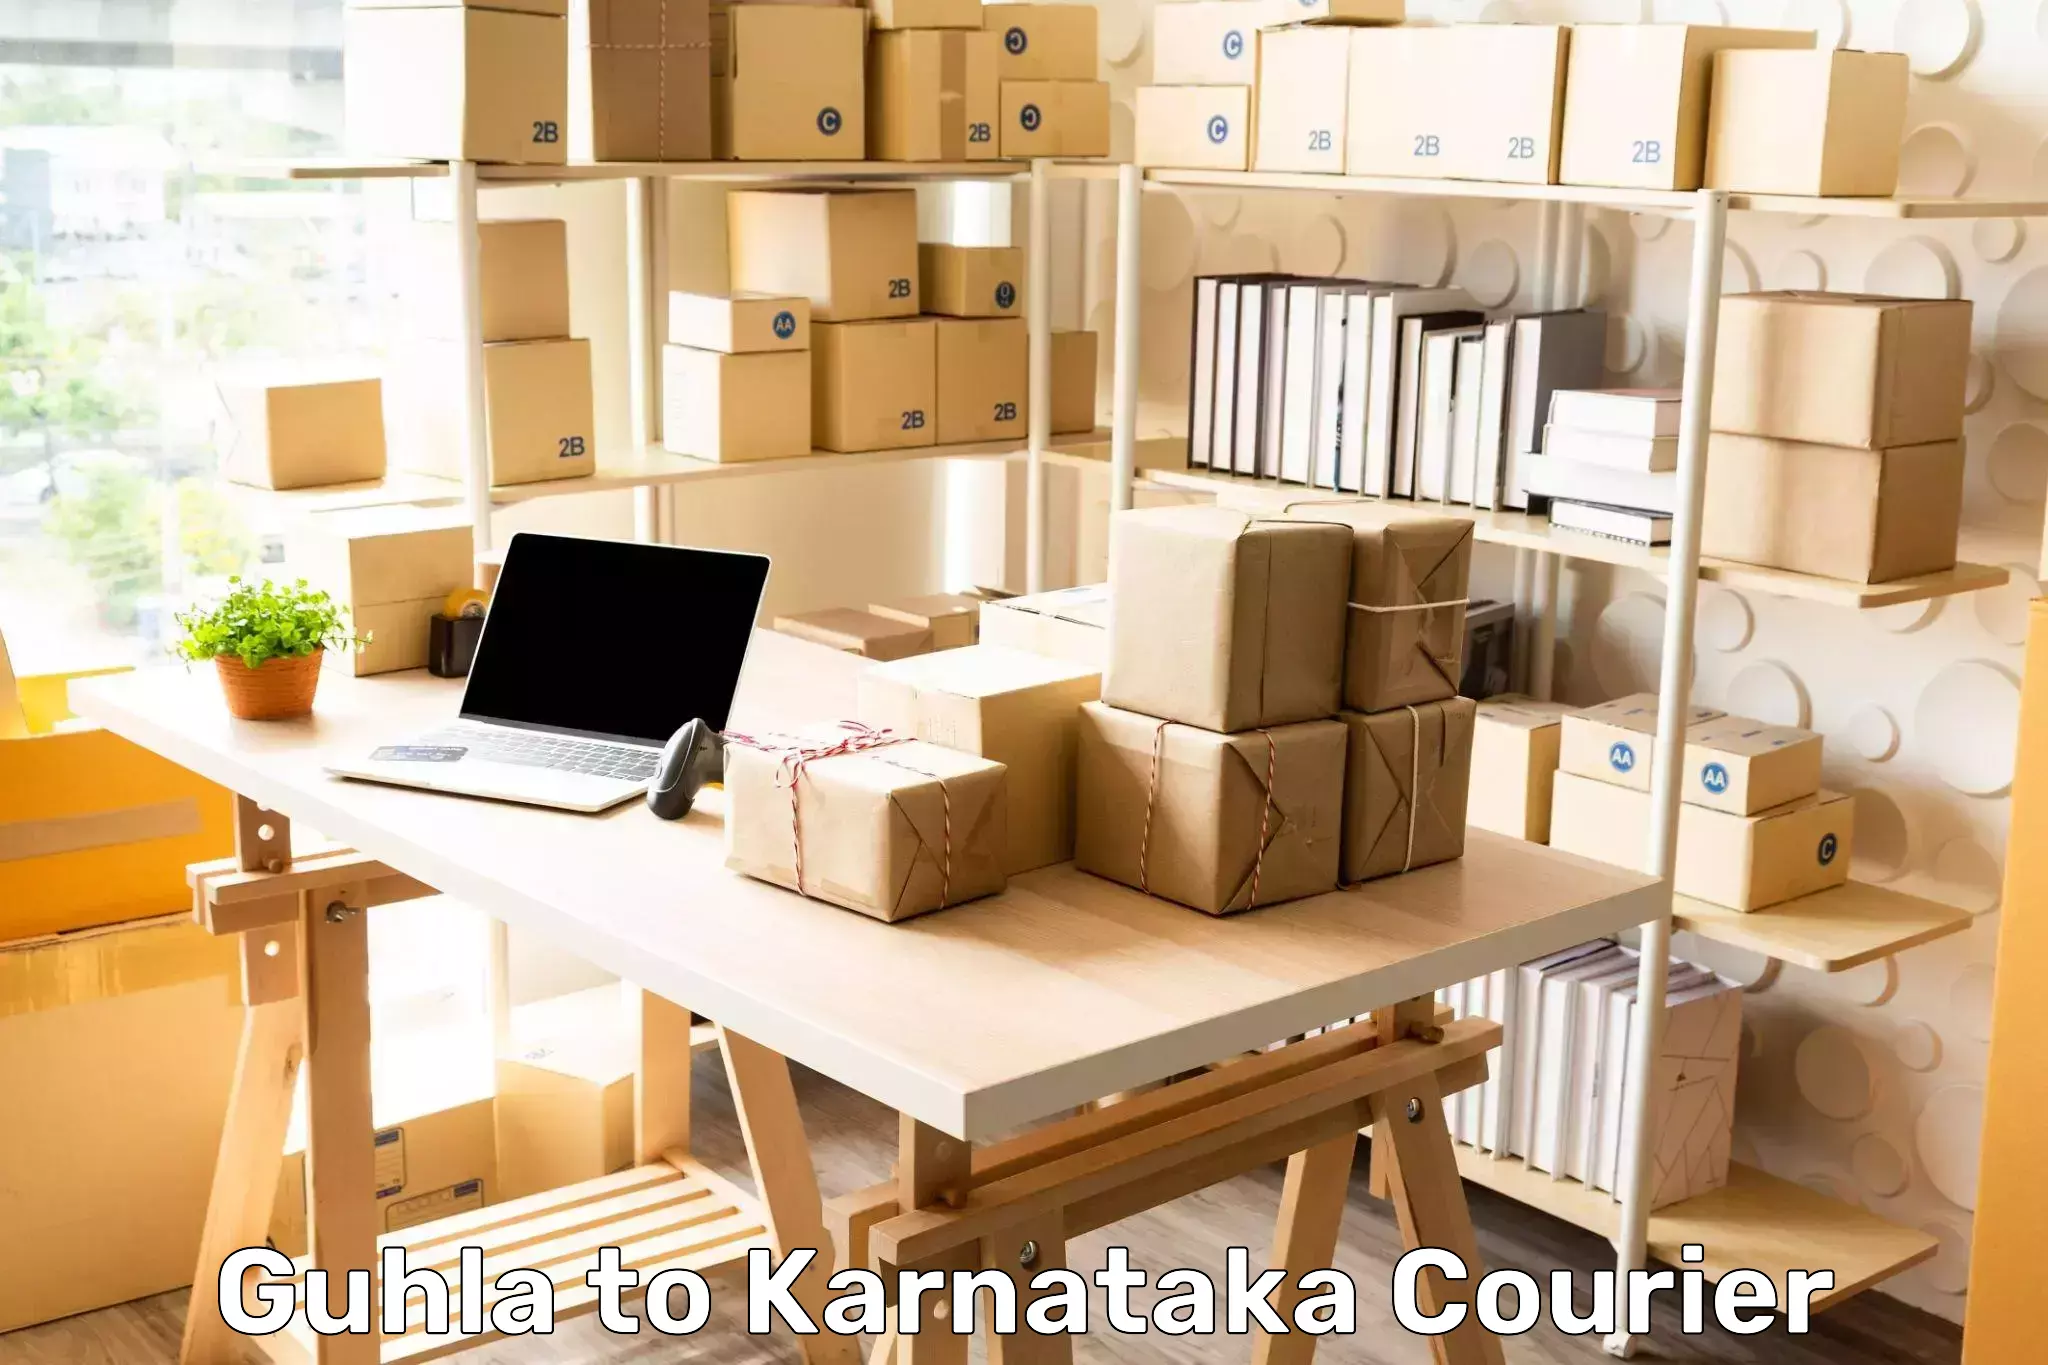 Customized shipping options Guhla to Karnataka